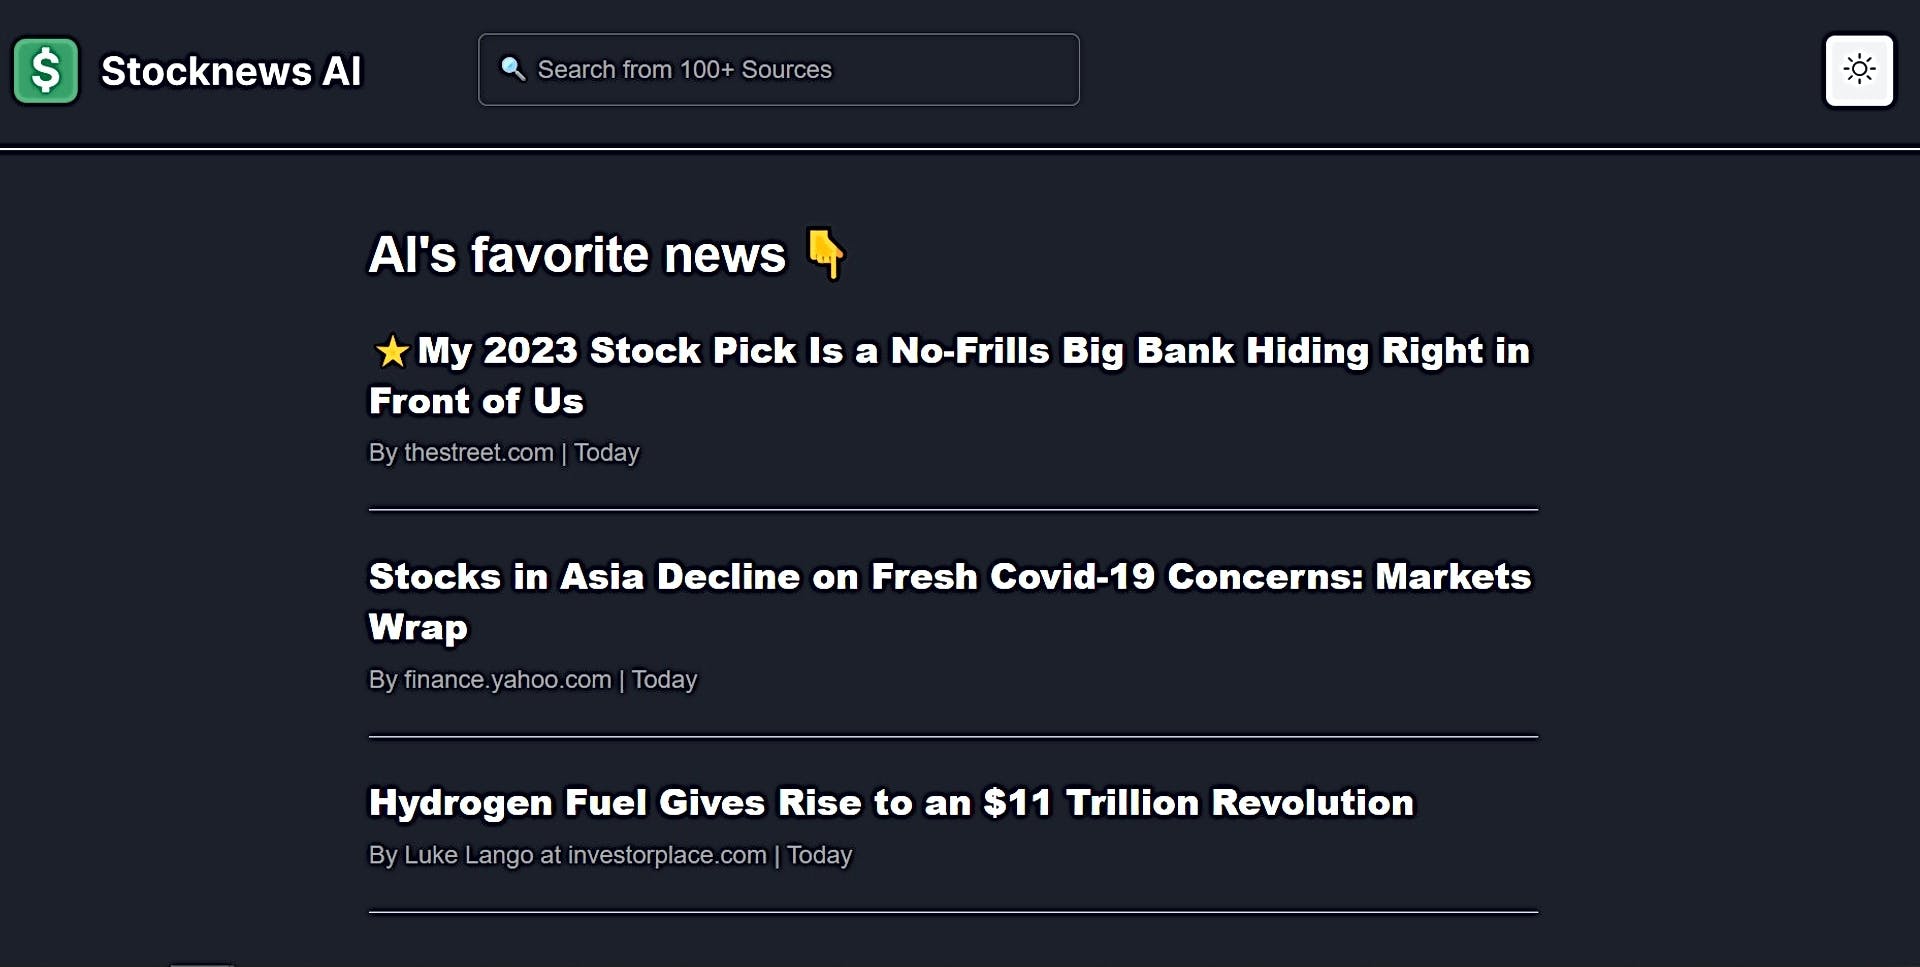 Stocknews AI featured